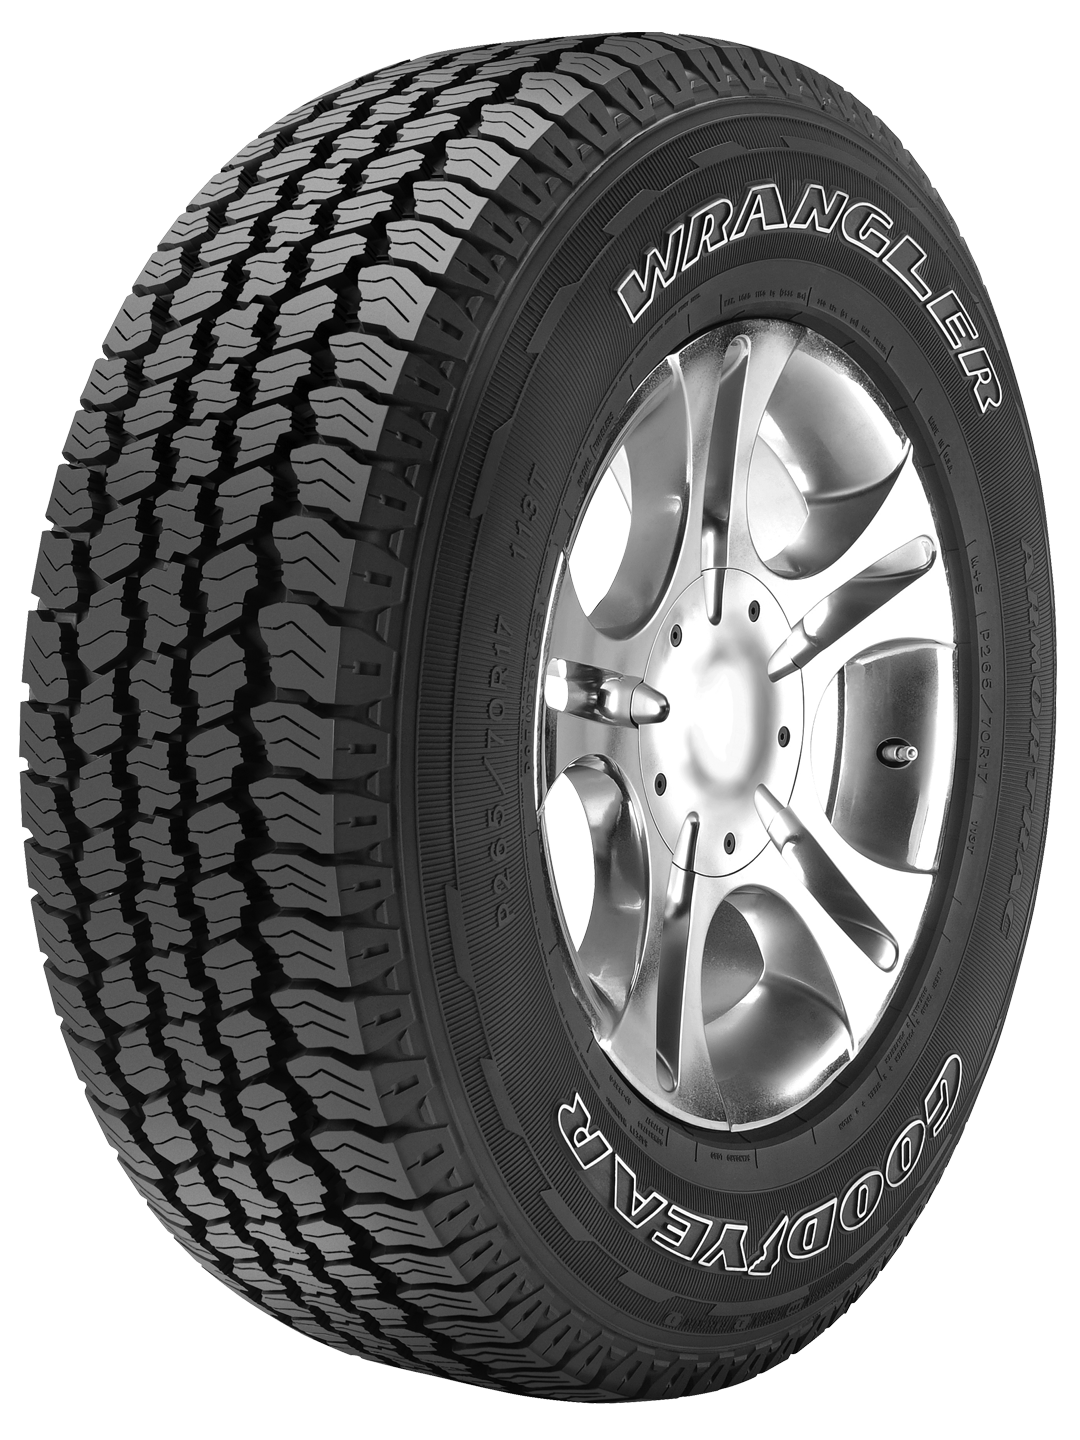 GOODYEAR WRANGLER ARMORTRAC-P P225 / 75 R 15 - Appalacian Tire Products &  Service Appalacian Tire Products & Service